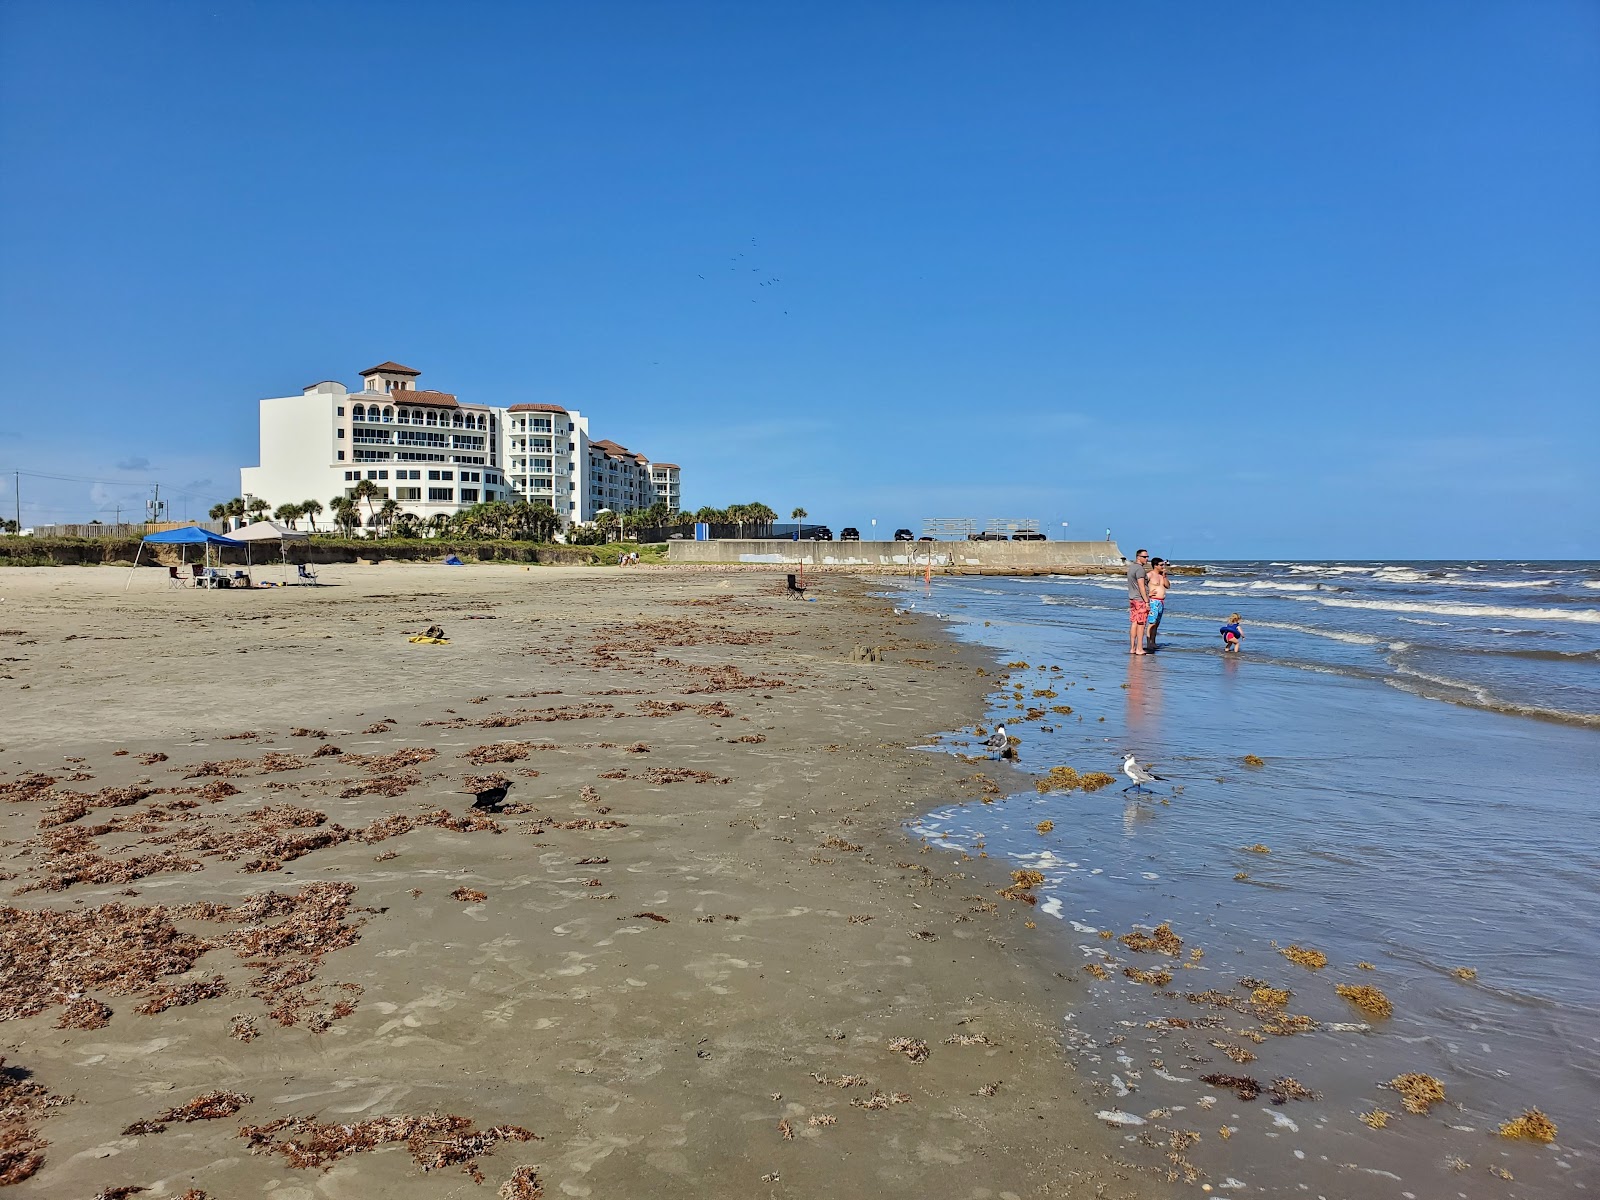 Foto di Galveston beach II ubicato in zona naturale